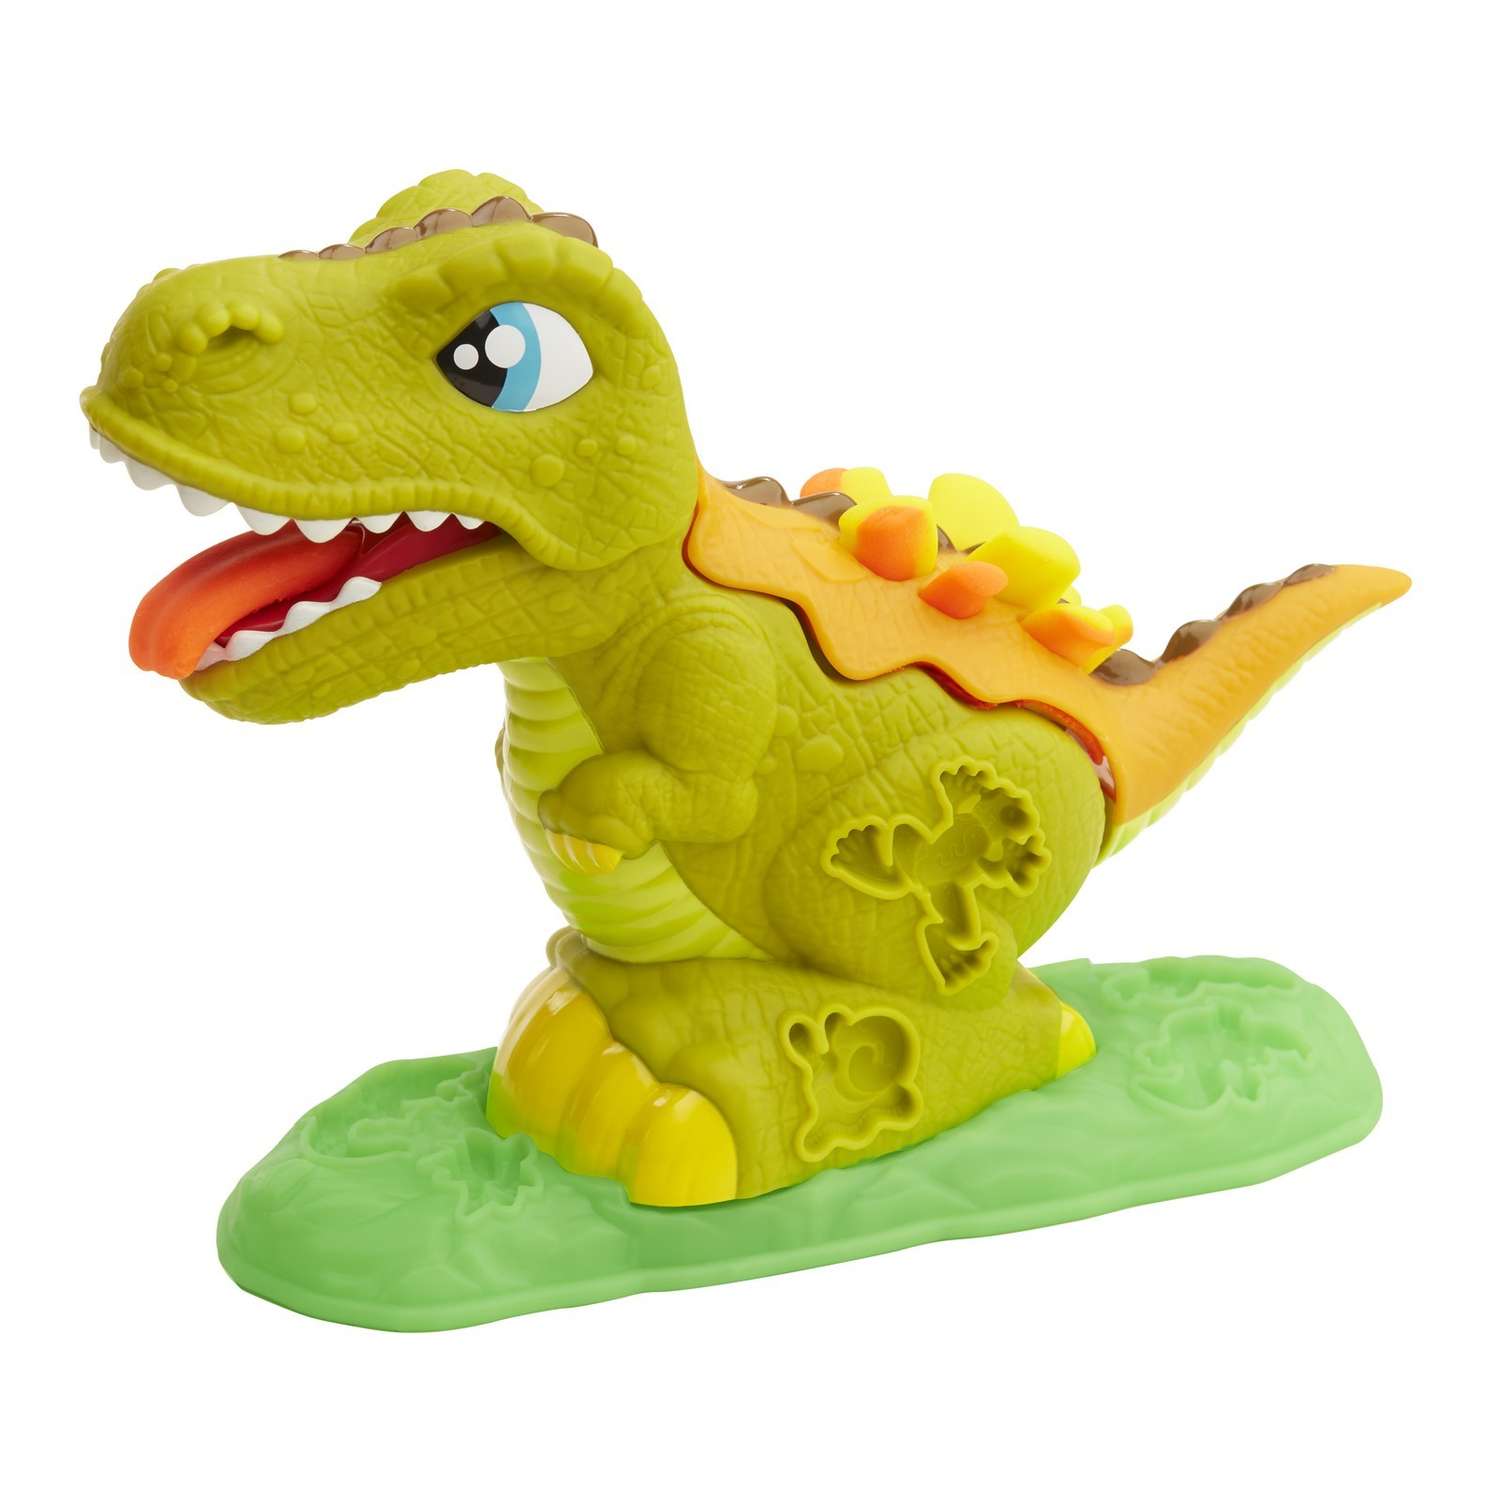 Play динозавры. Могучий динозавр Play Doh. Динозавр Хасбро. Динозавры игрушки Хасбро. Игрушка Hasbro Динозаврик.